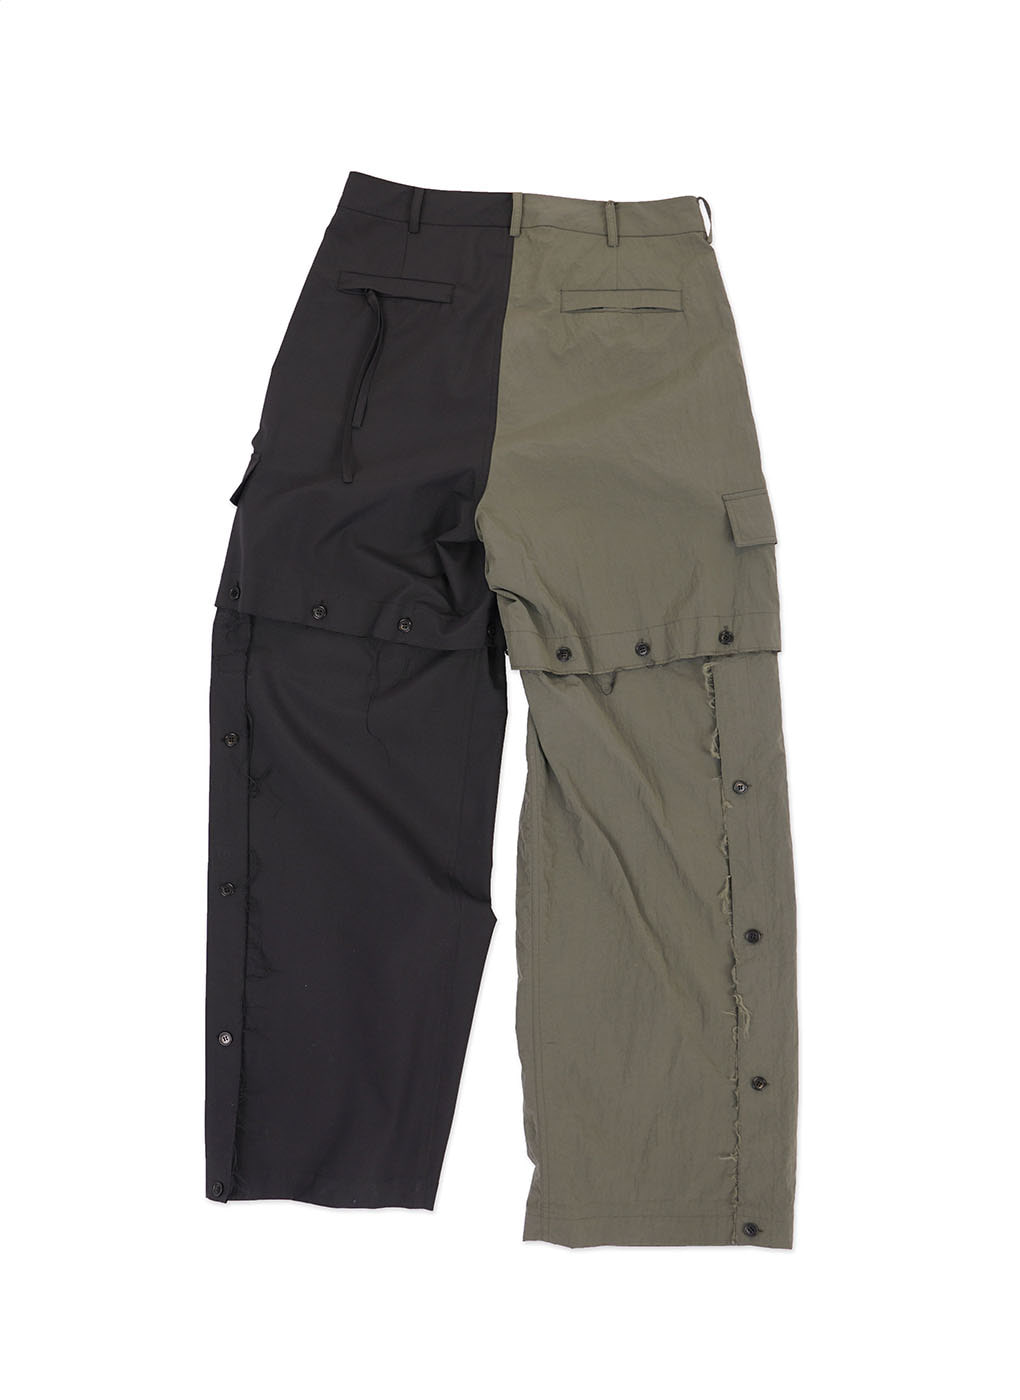 Black/Khaki Fabric Contrast Detachable Panel Pants